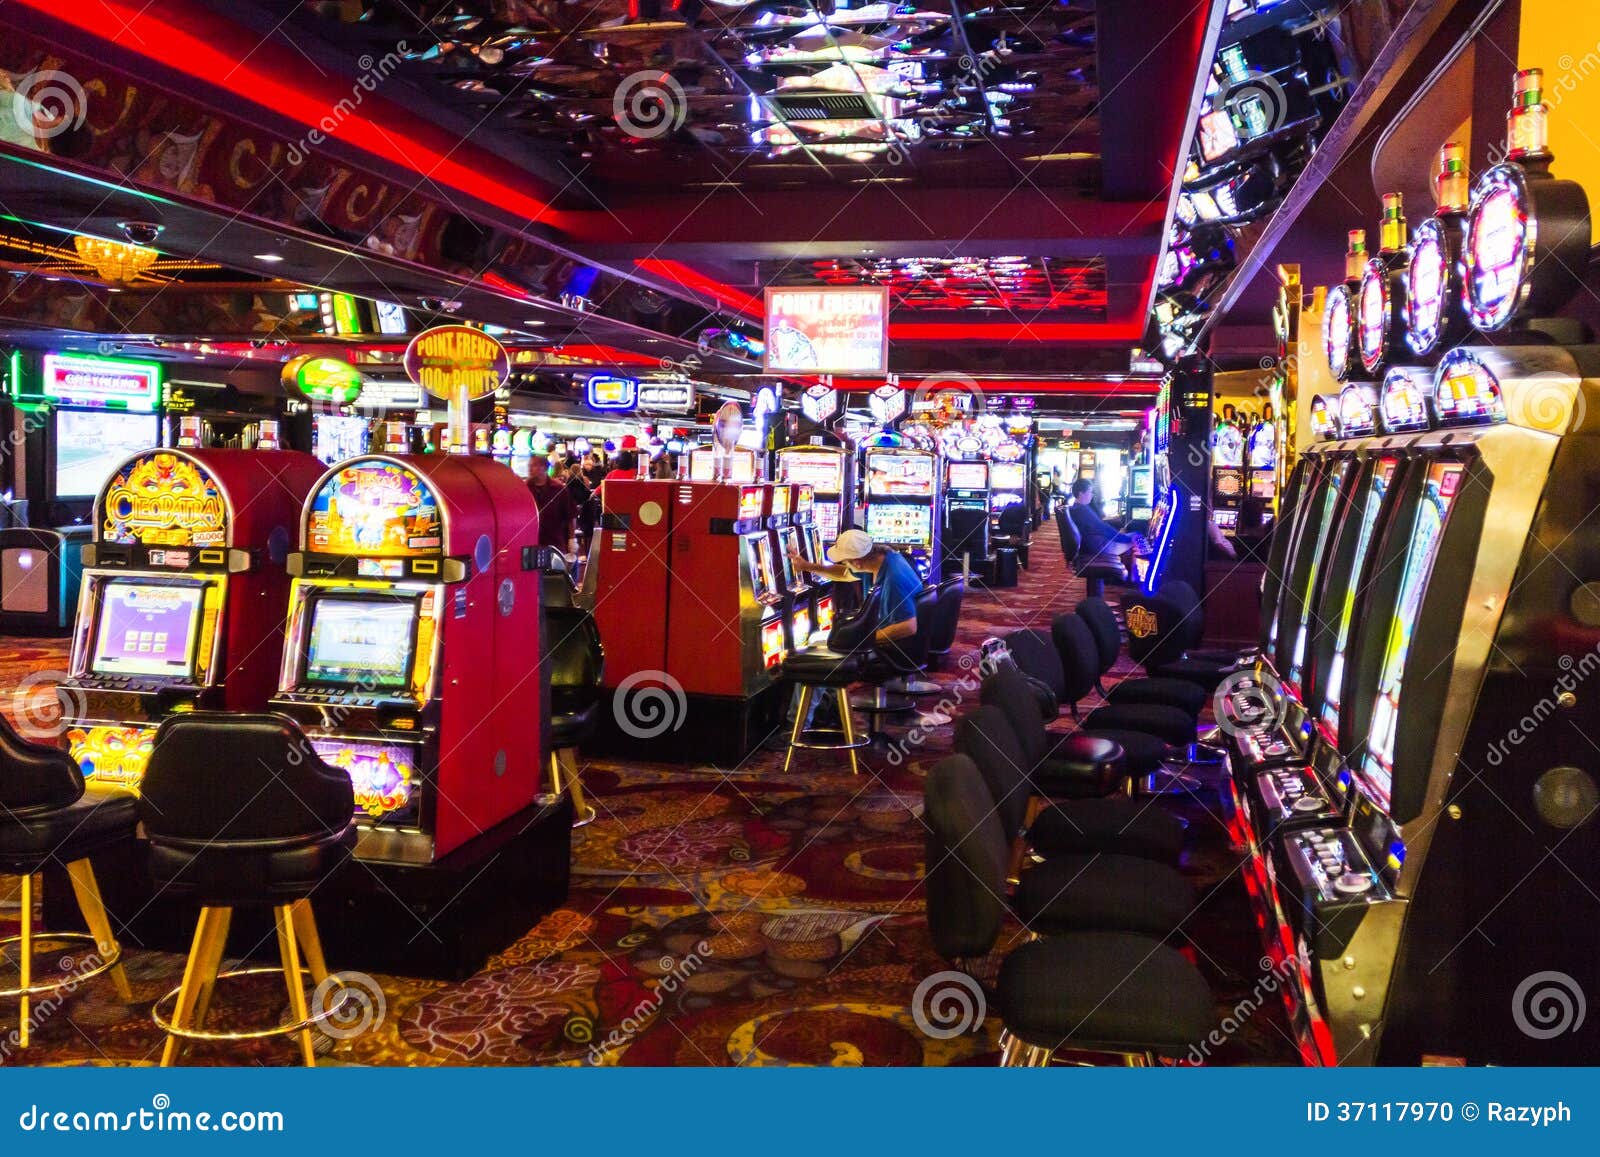 Casino Royale Las Vegas Free Slot Play